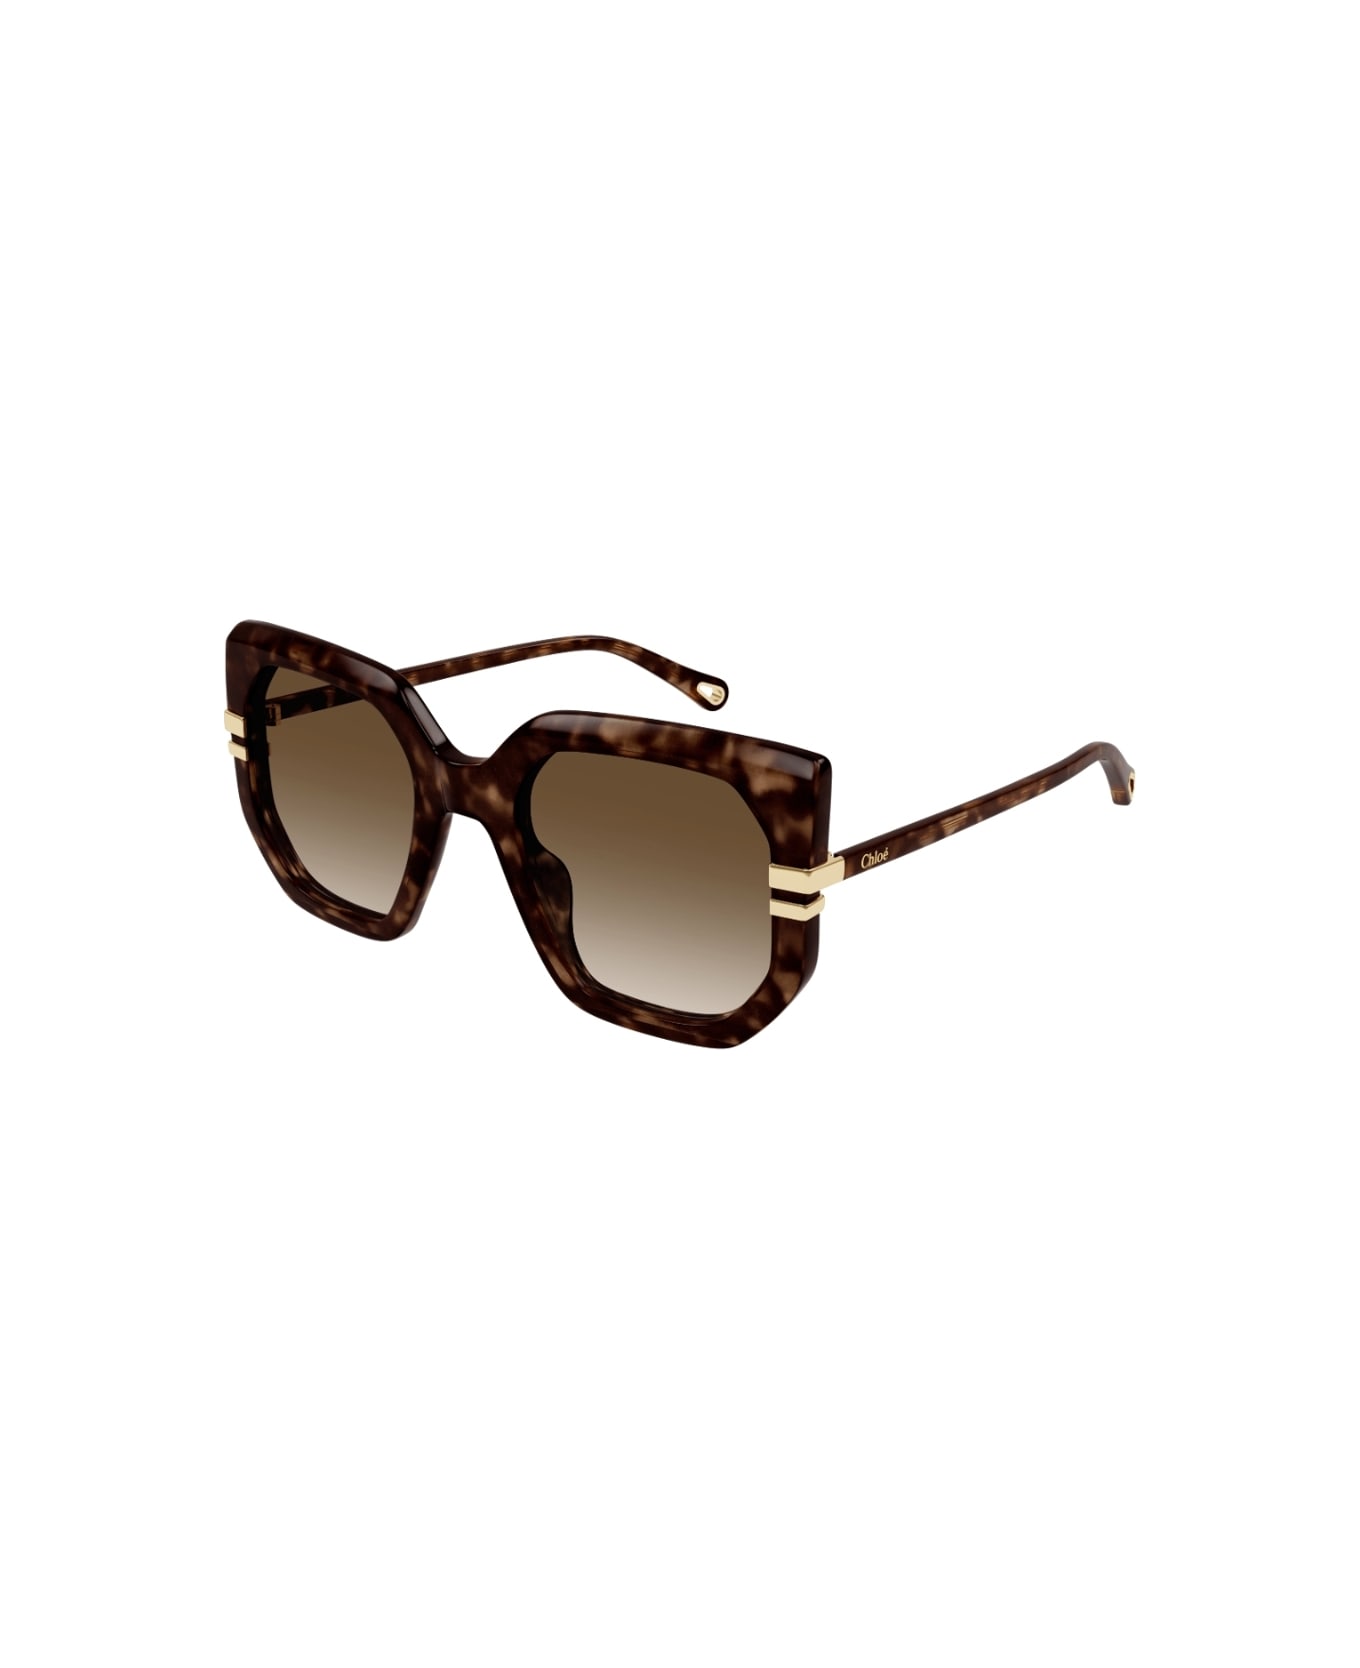 Chloé Eyewear CH0240s 002 Sunglasses